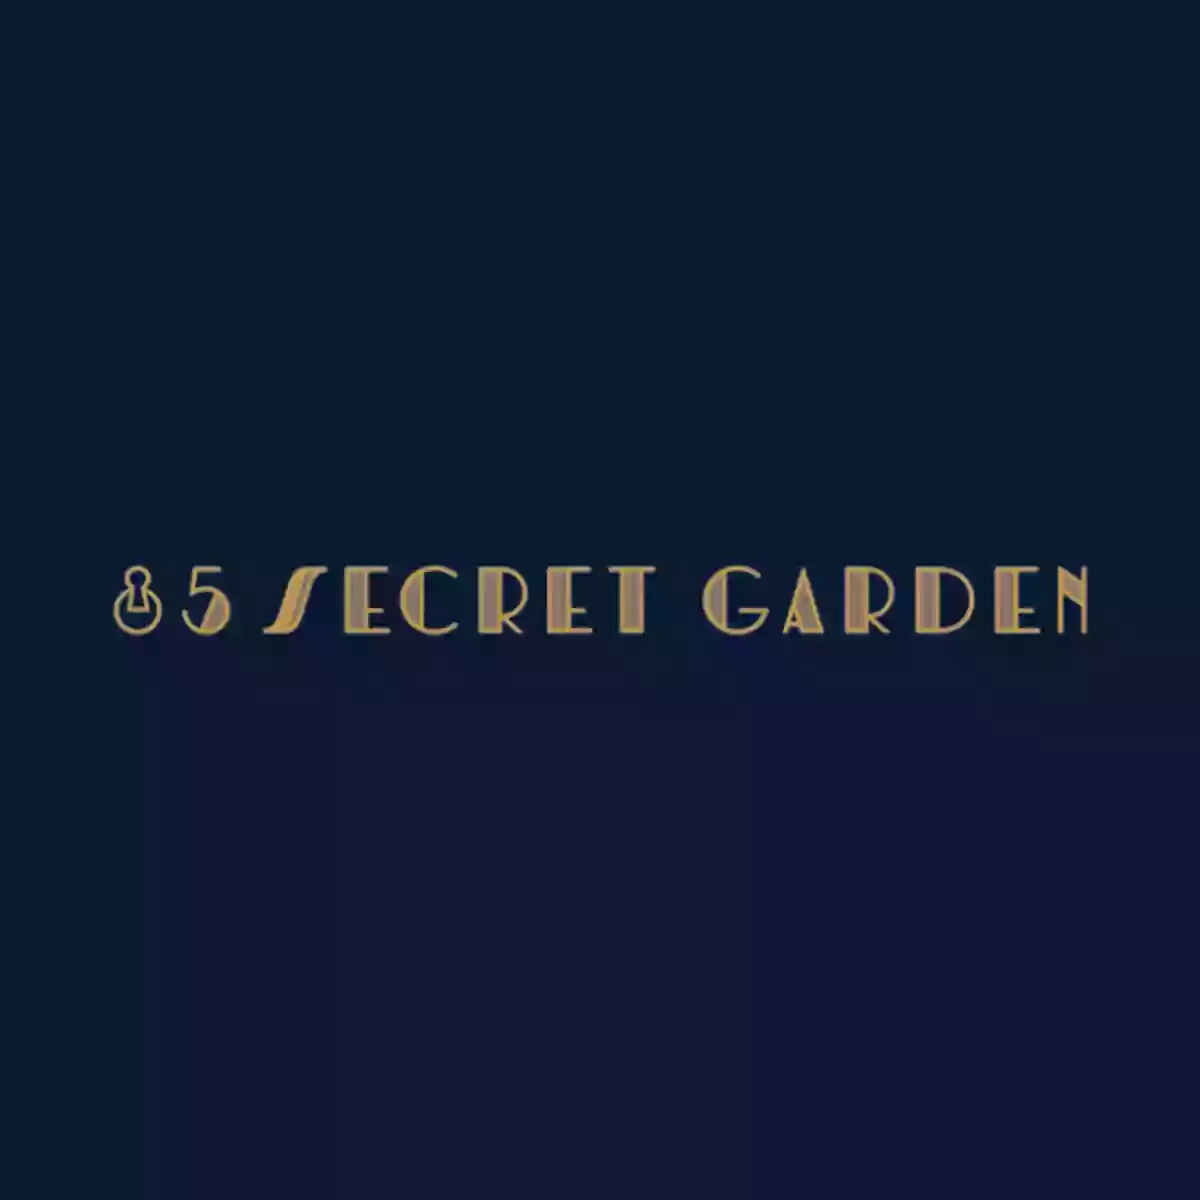 85 Secret Garden